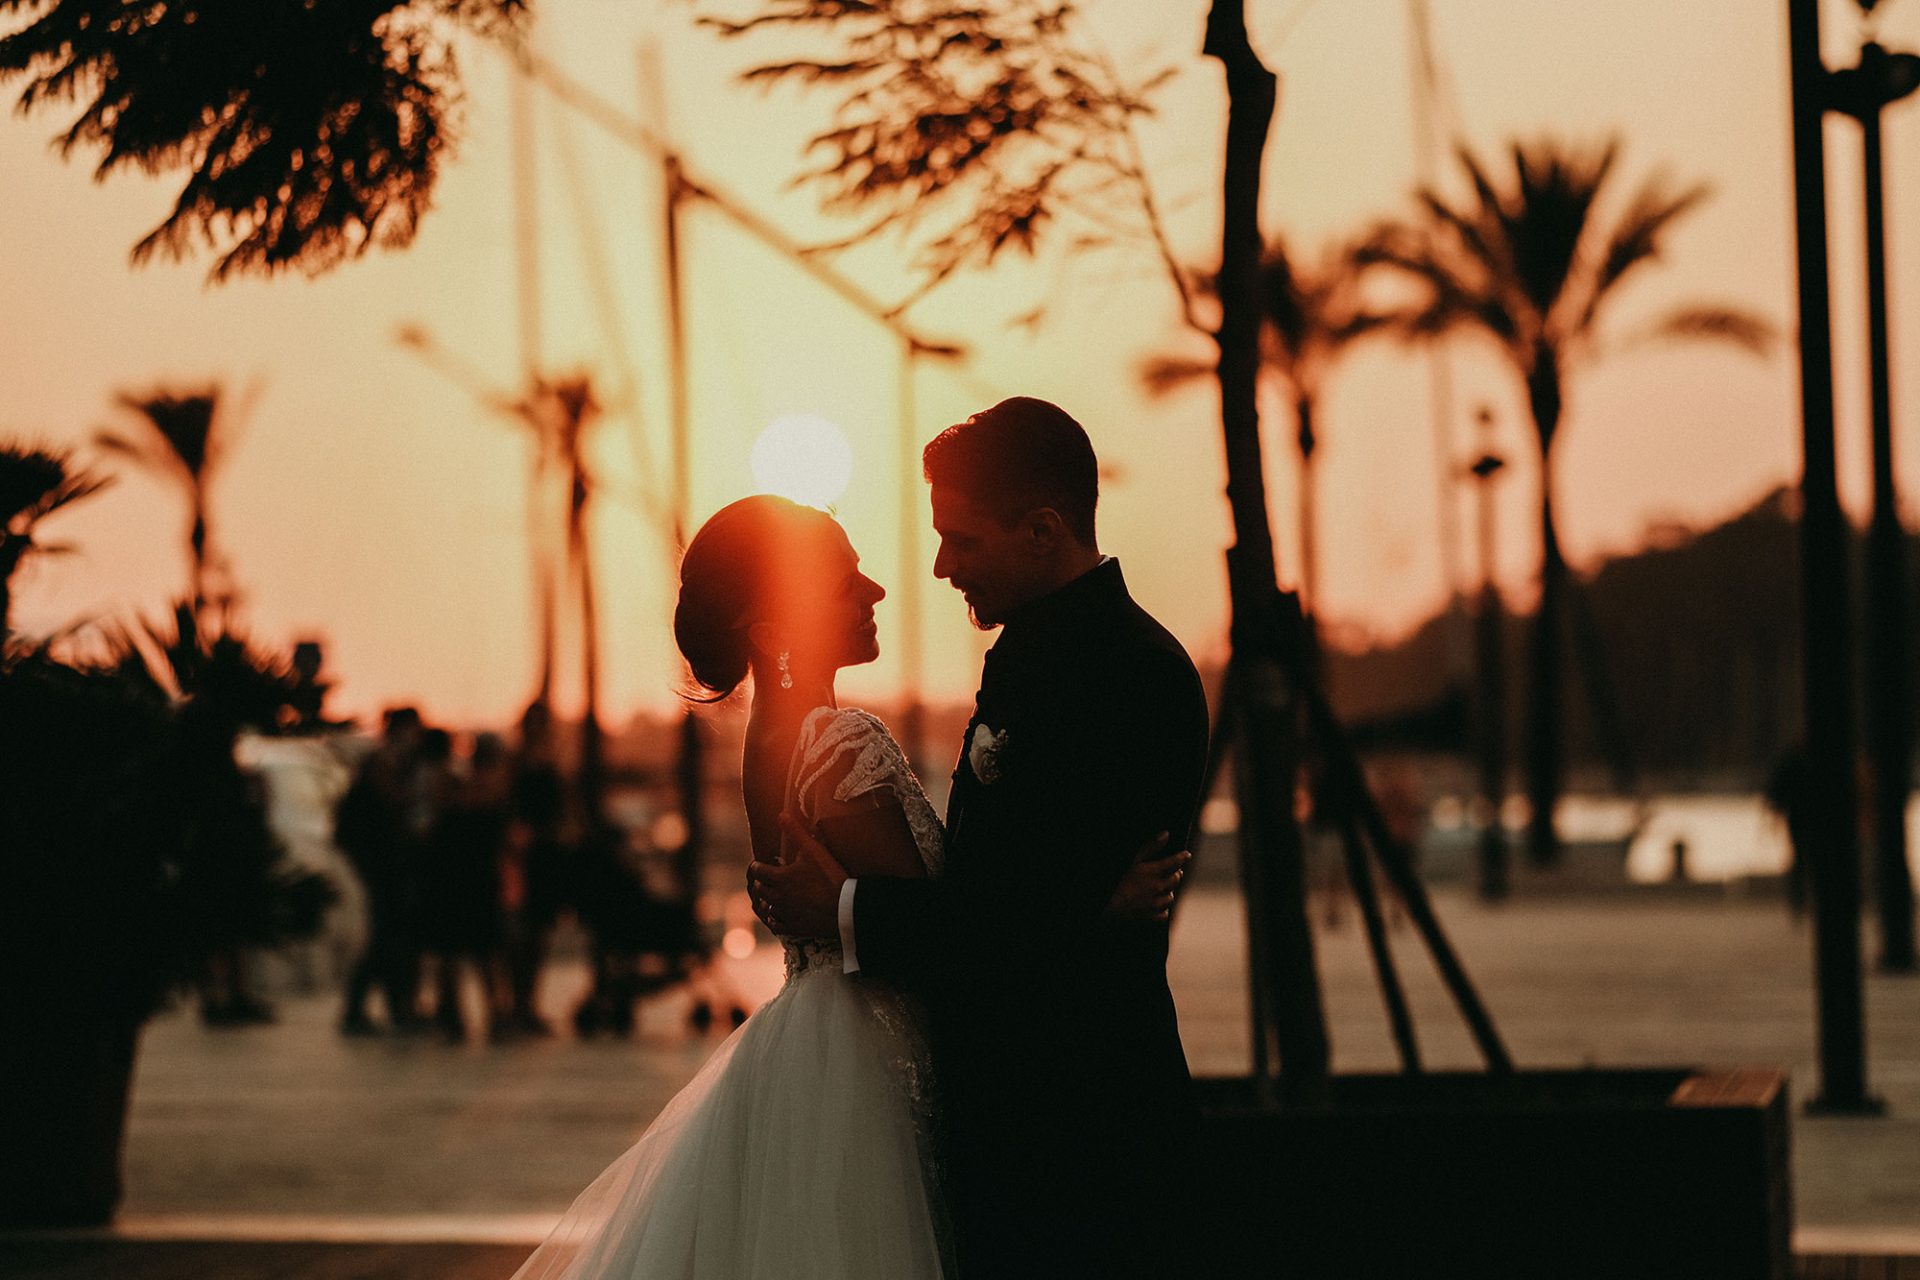 Wedding photoshoot tips and tricks - Fuji X Passion